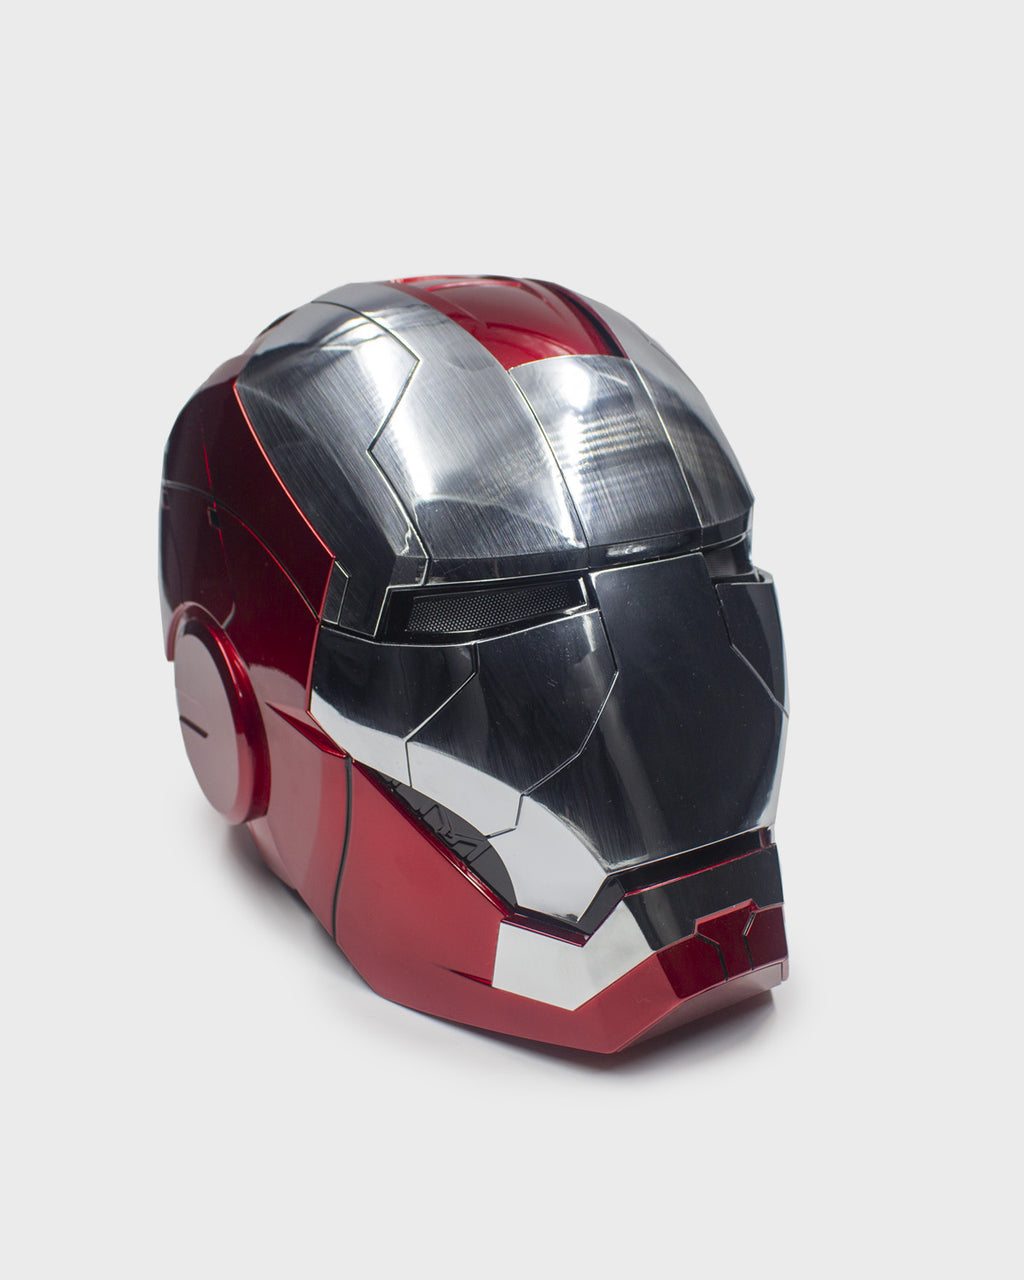 The Iron Man Helmet MK5 Activated